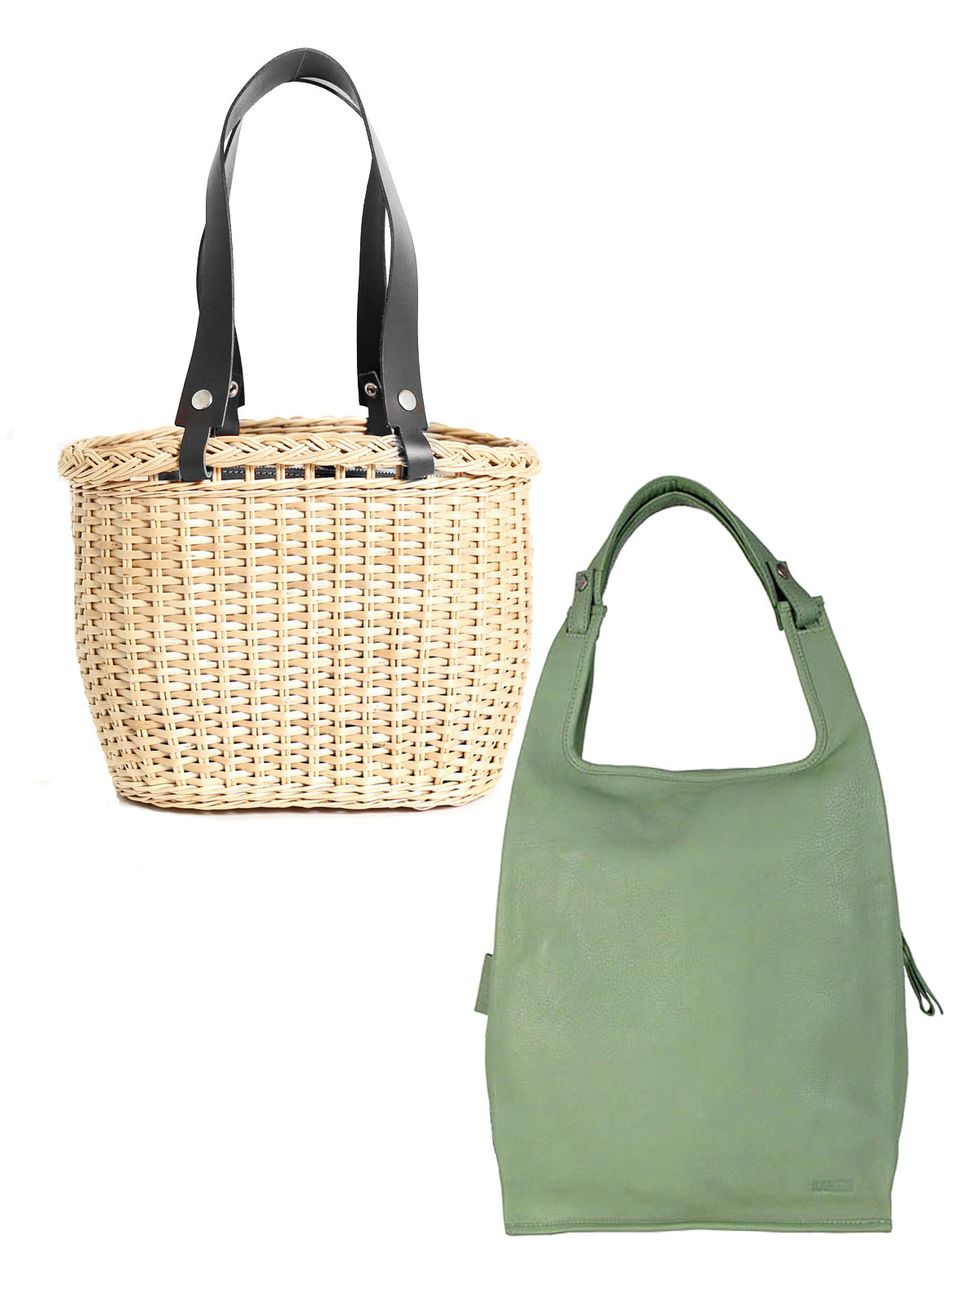 Handbag, Bag, Product, Fashion accessory, Shoulder bag, Beige, Tote bag, Material property, Luggage and bags, Hobo bag, 